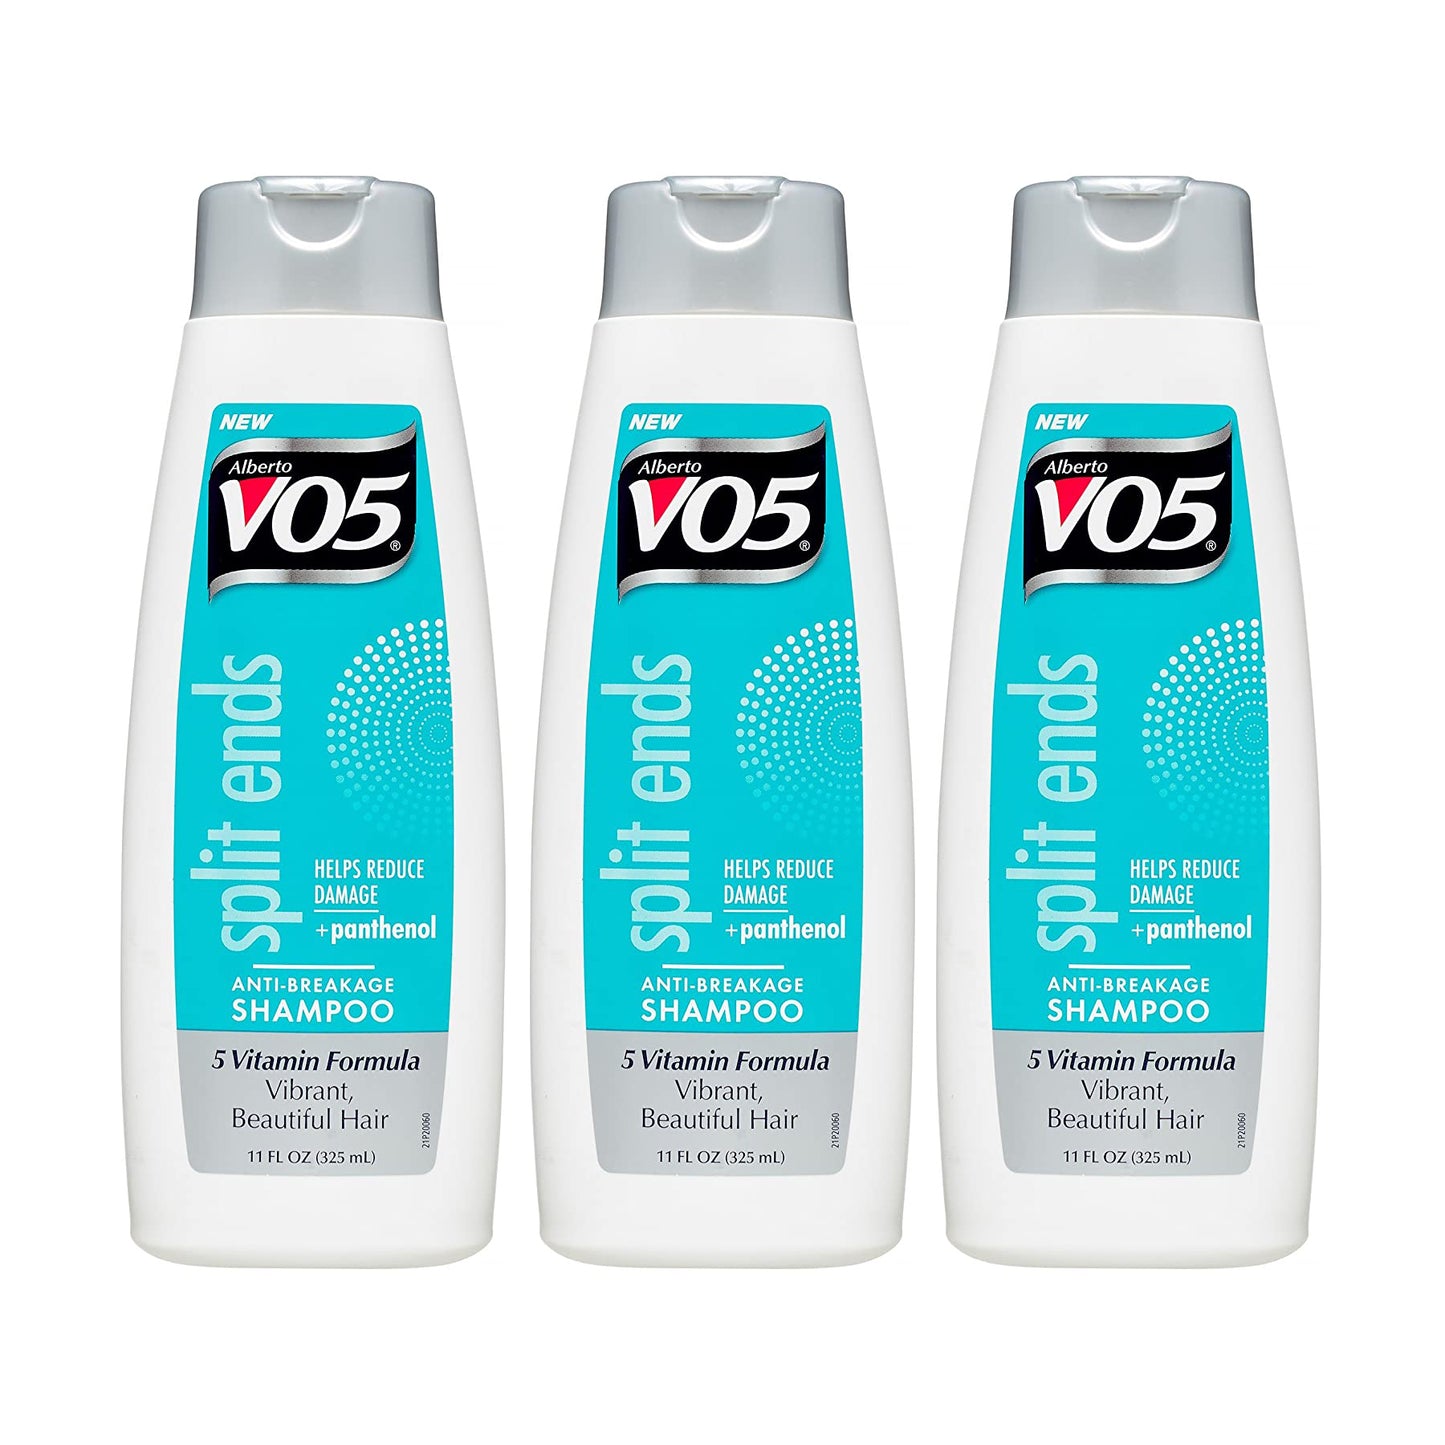 VO5 Split Ends Anti-Breakage Shampoo with panthenol 11 Oz (Pack of 3)